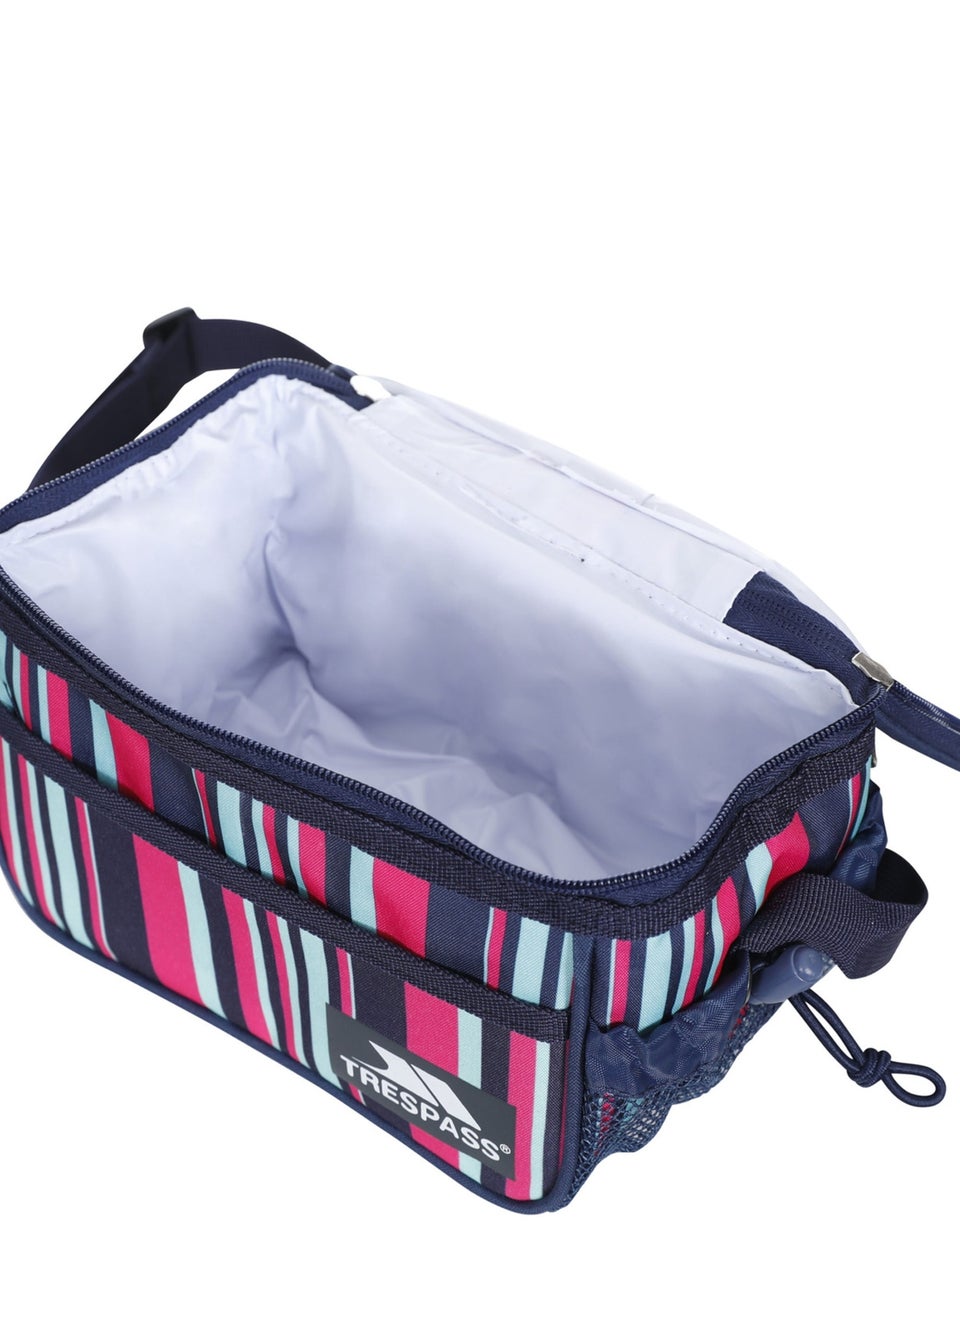 Trespass Pastel Pink Nuko Small Cool Bag (3 Litres)